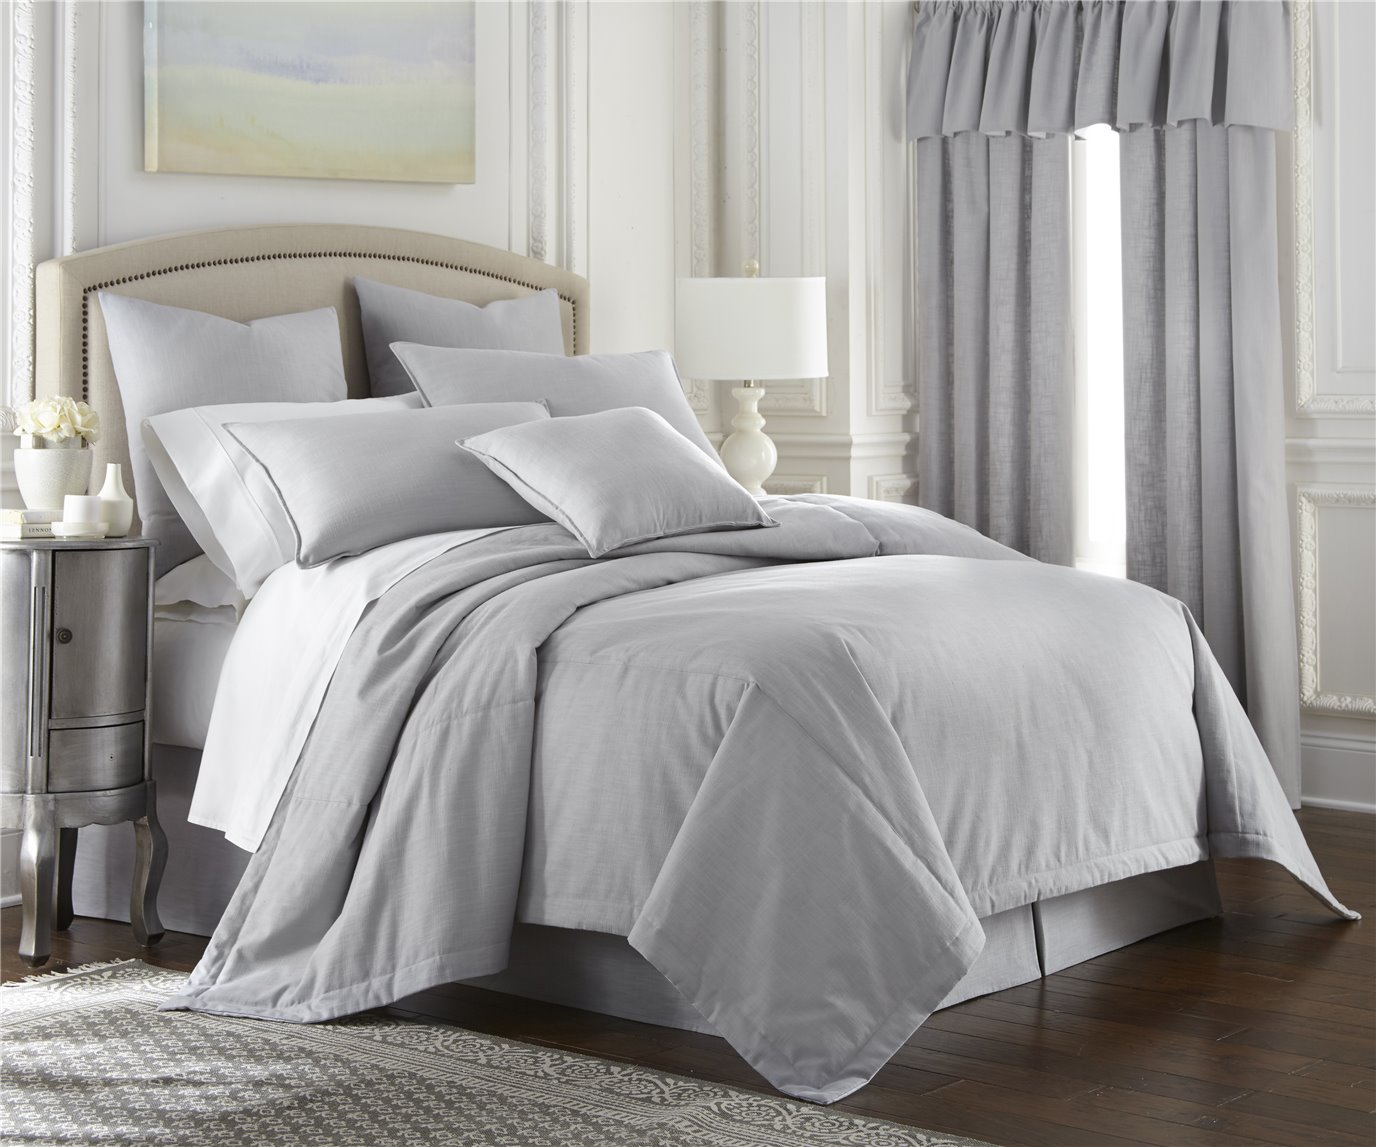 Cambric Gray Comforter Queen